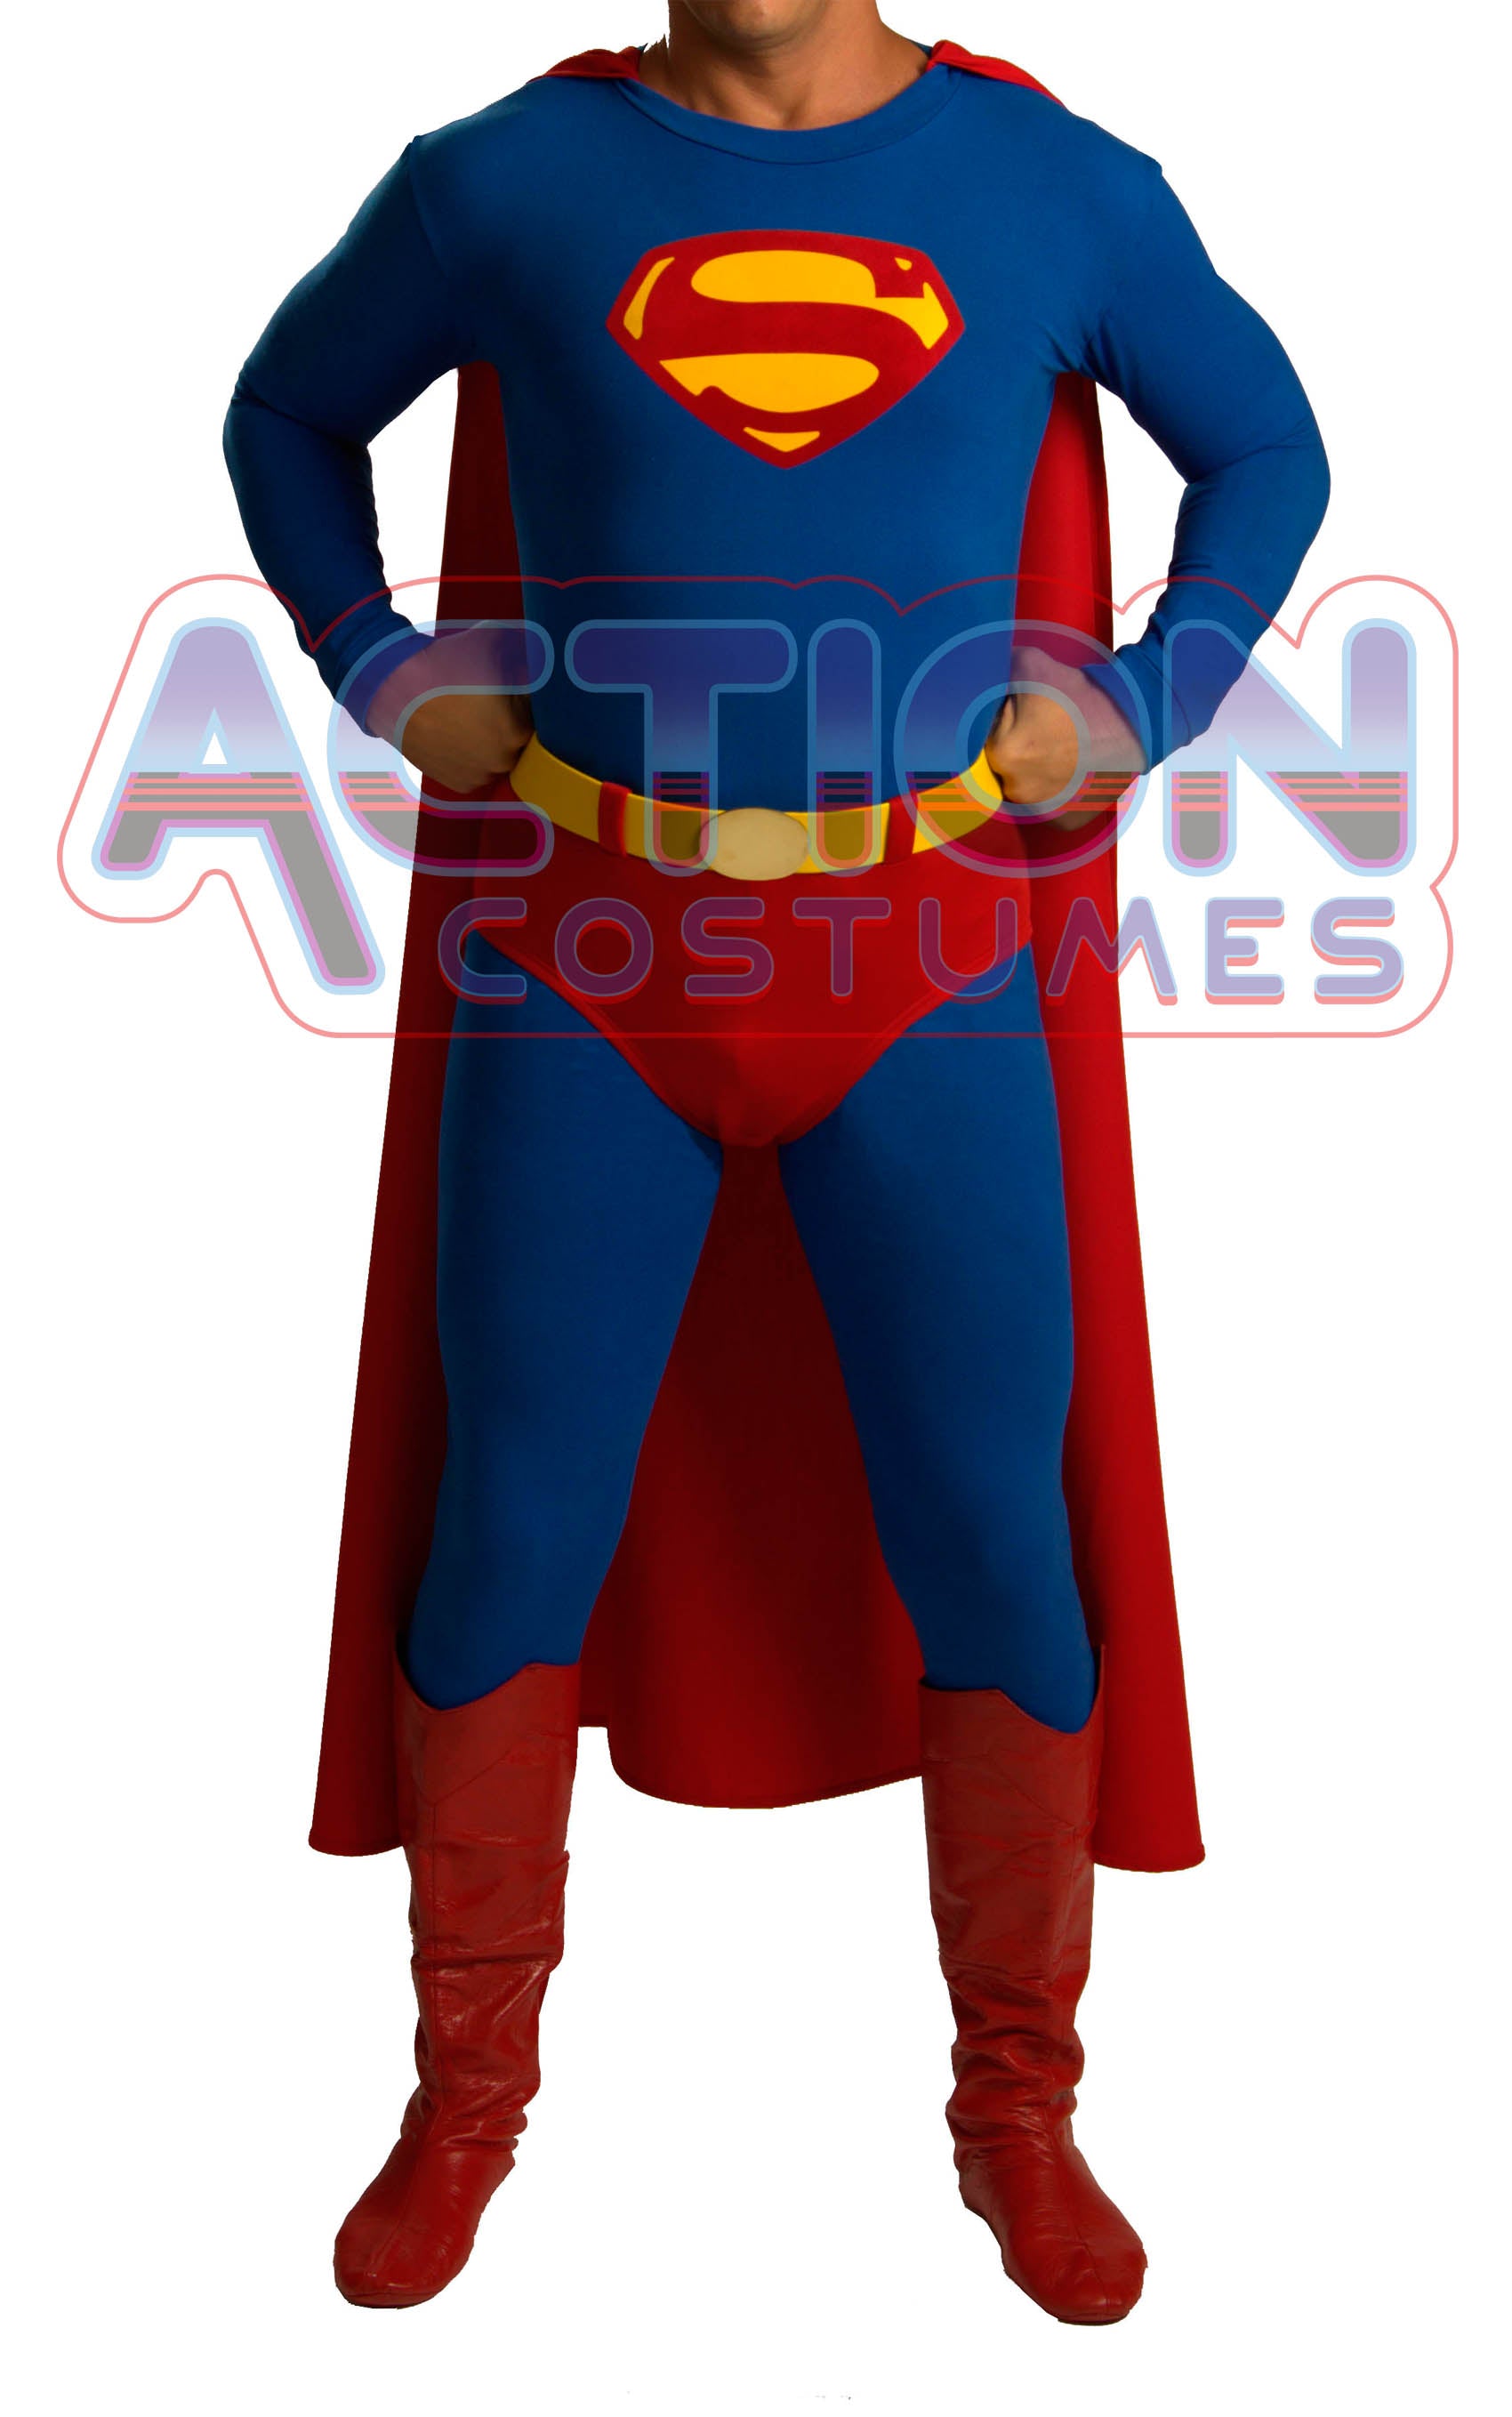 superman-costume-50s-style-1